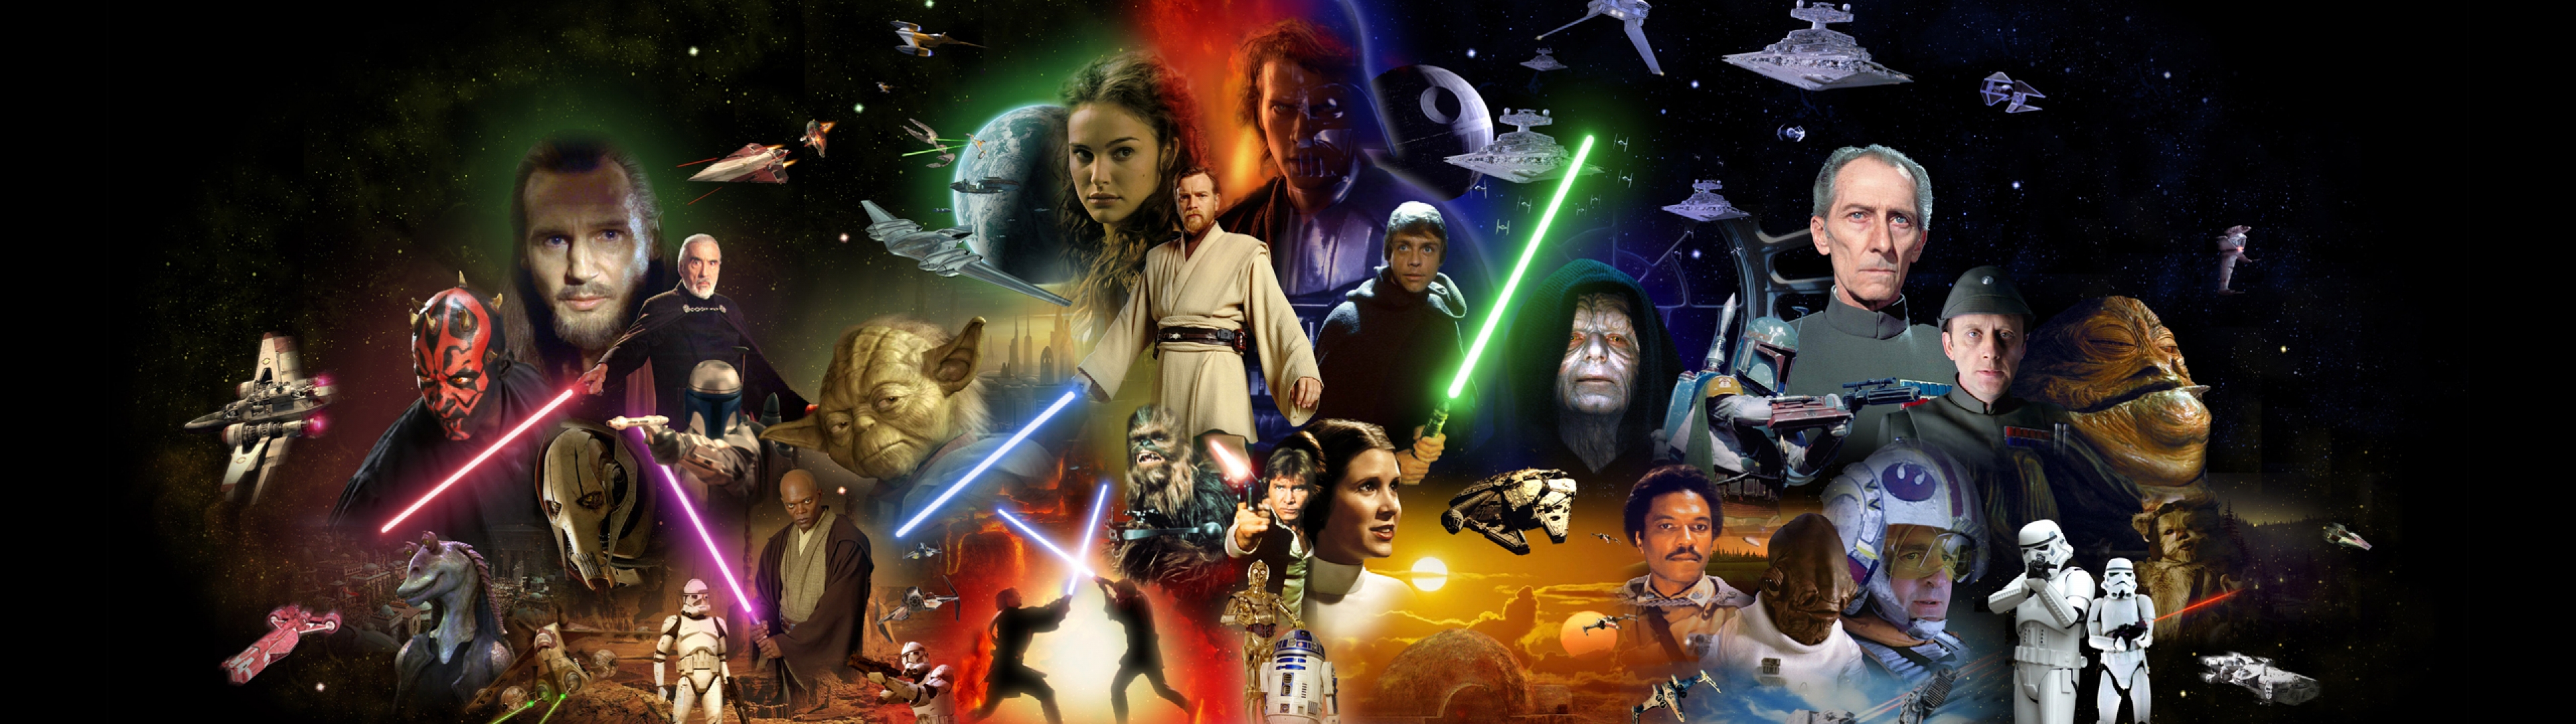 Star Wars Wallpaper HD Desktop Background